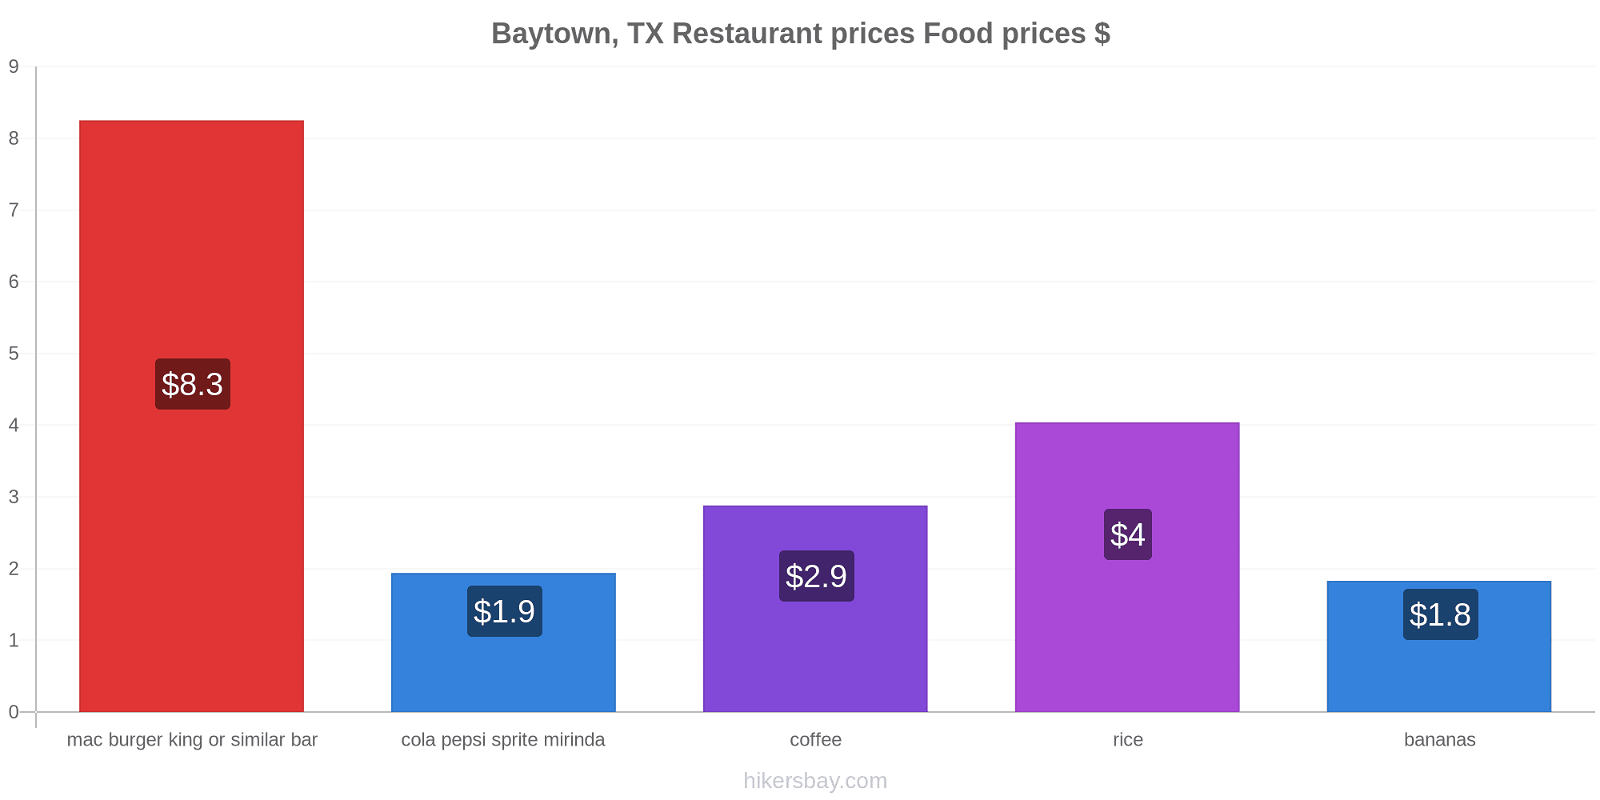 Baytown, TX price changes hikersbay.com